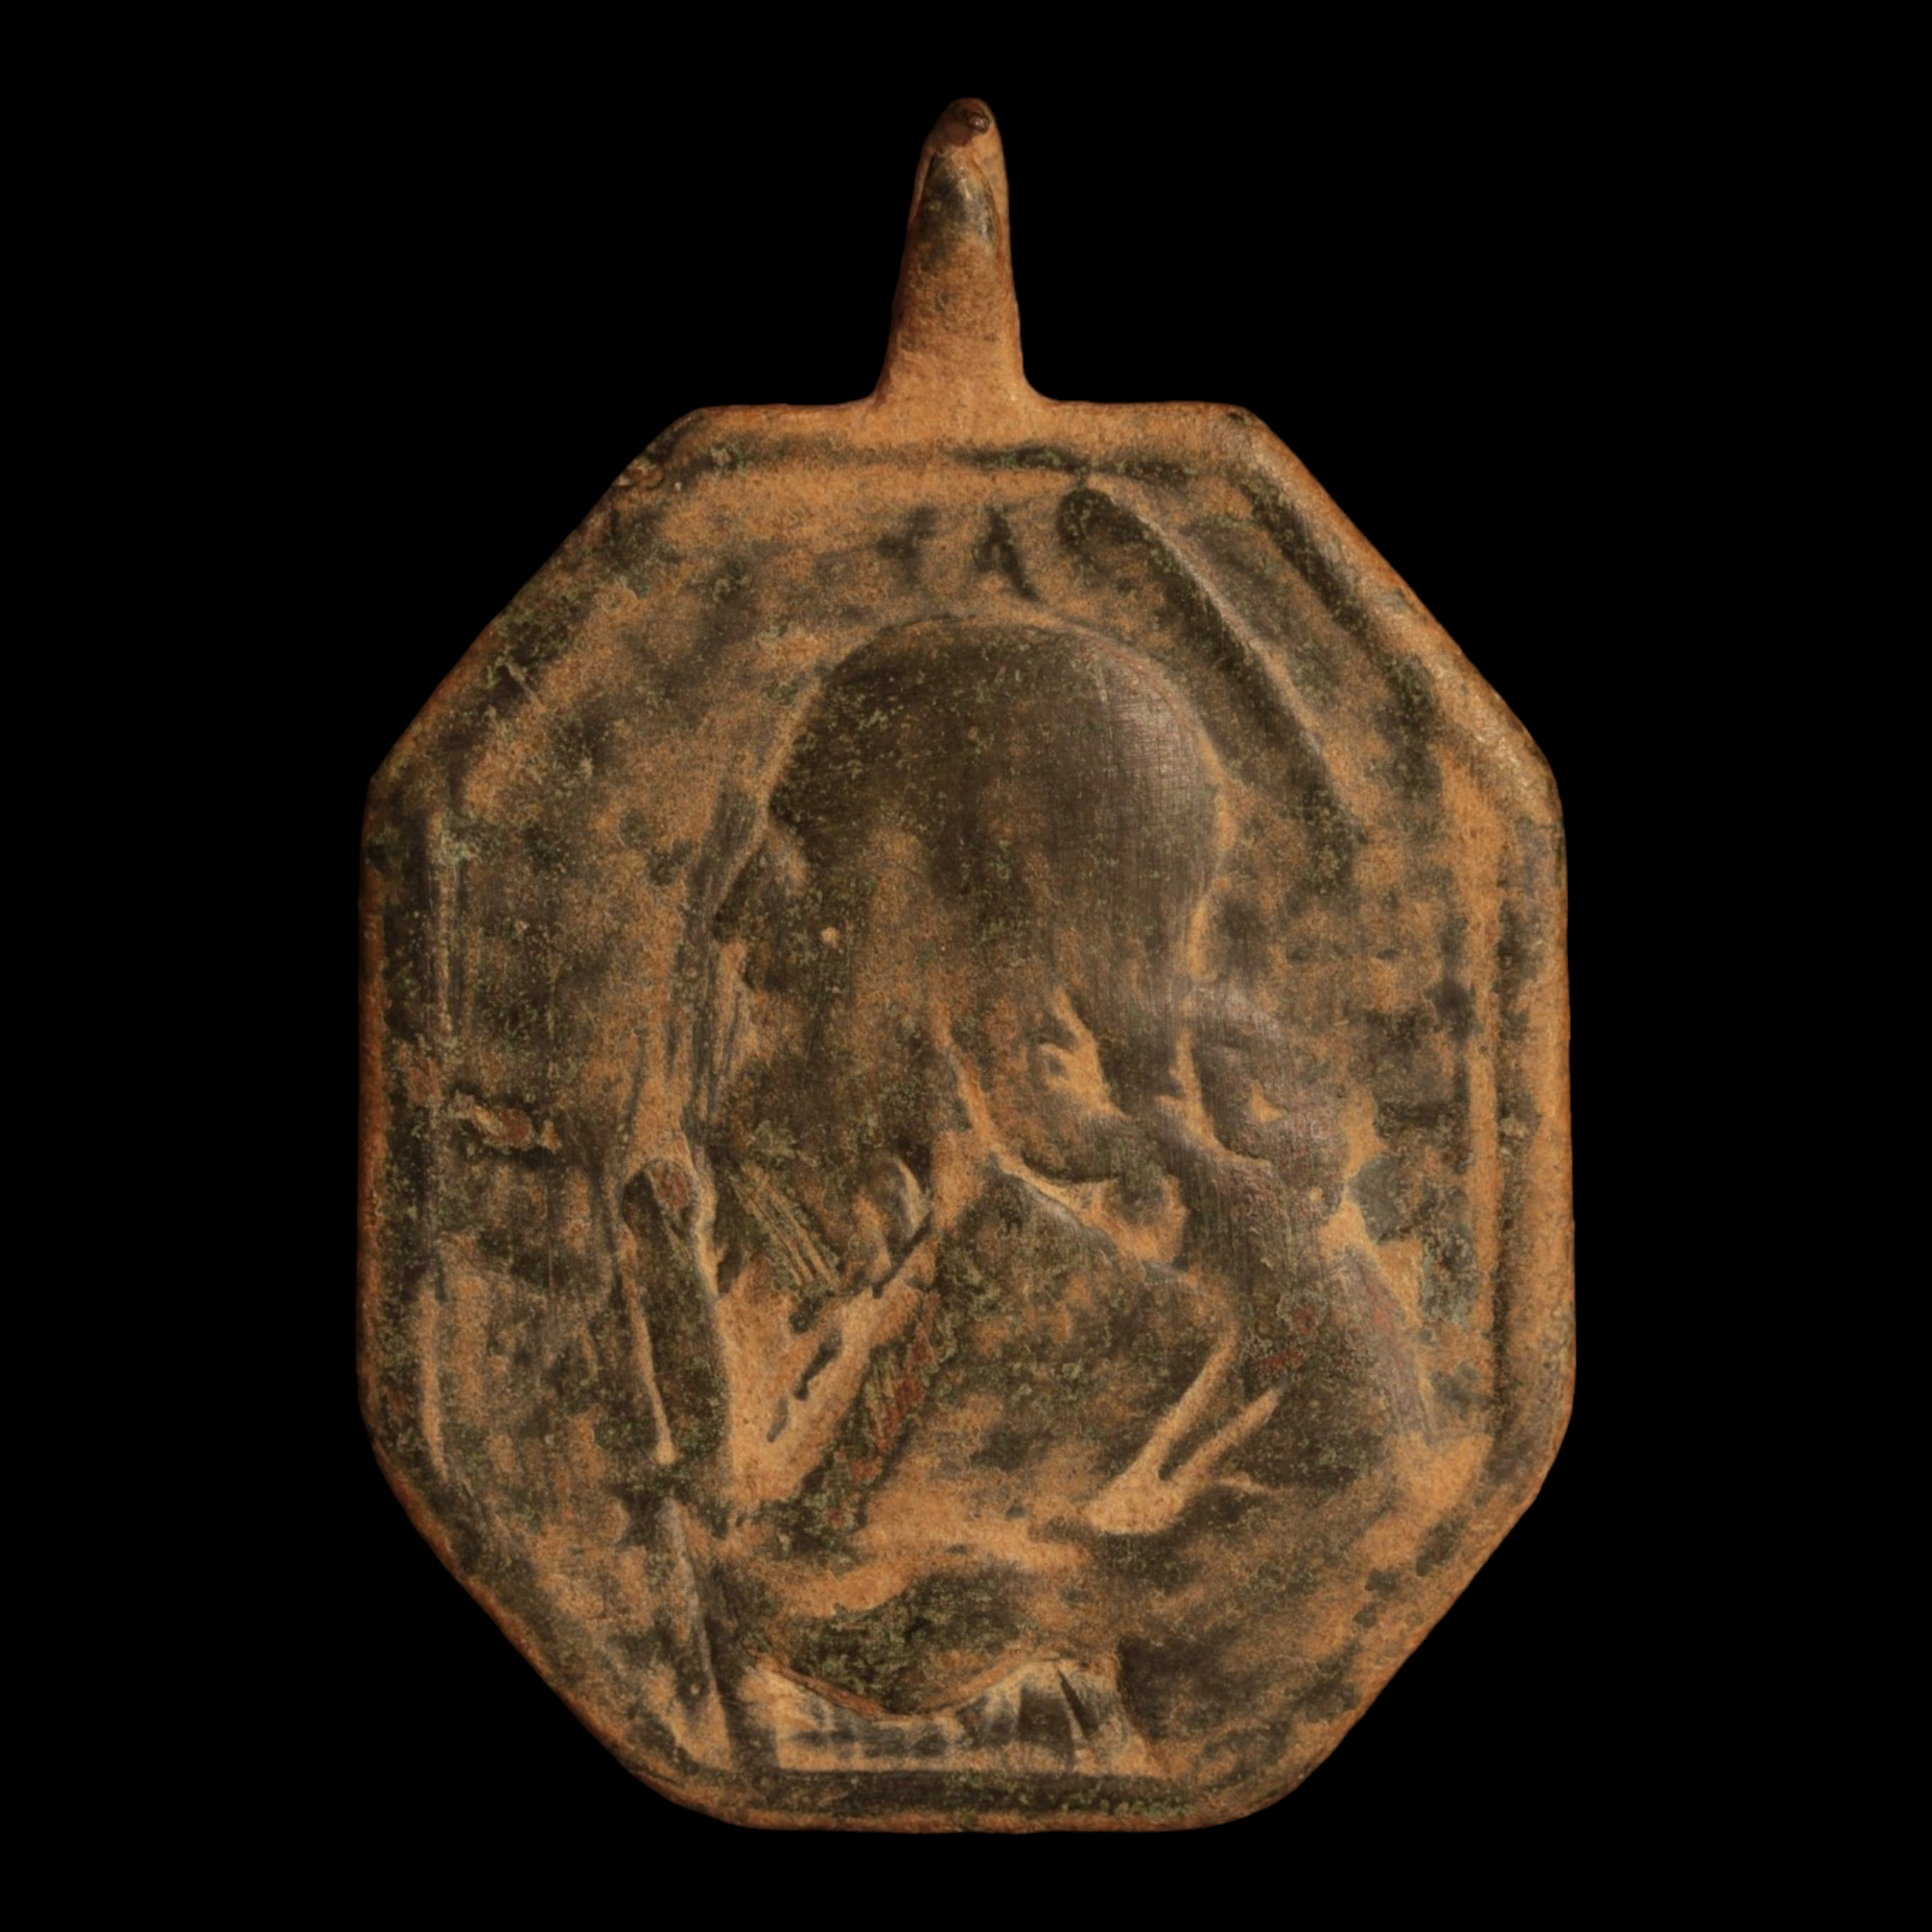 Religious Medal, Catholic Church, 47mm - 1500s to 1700s - Spanish Empire